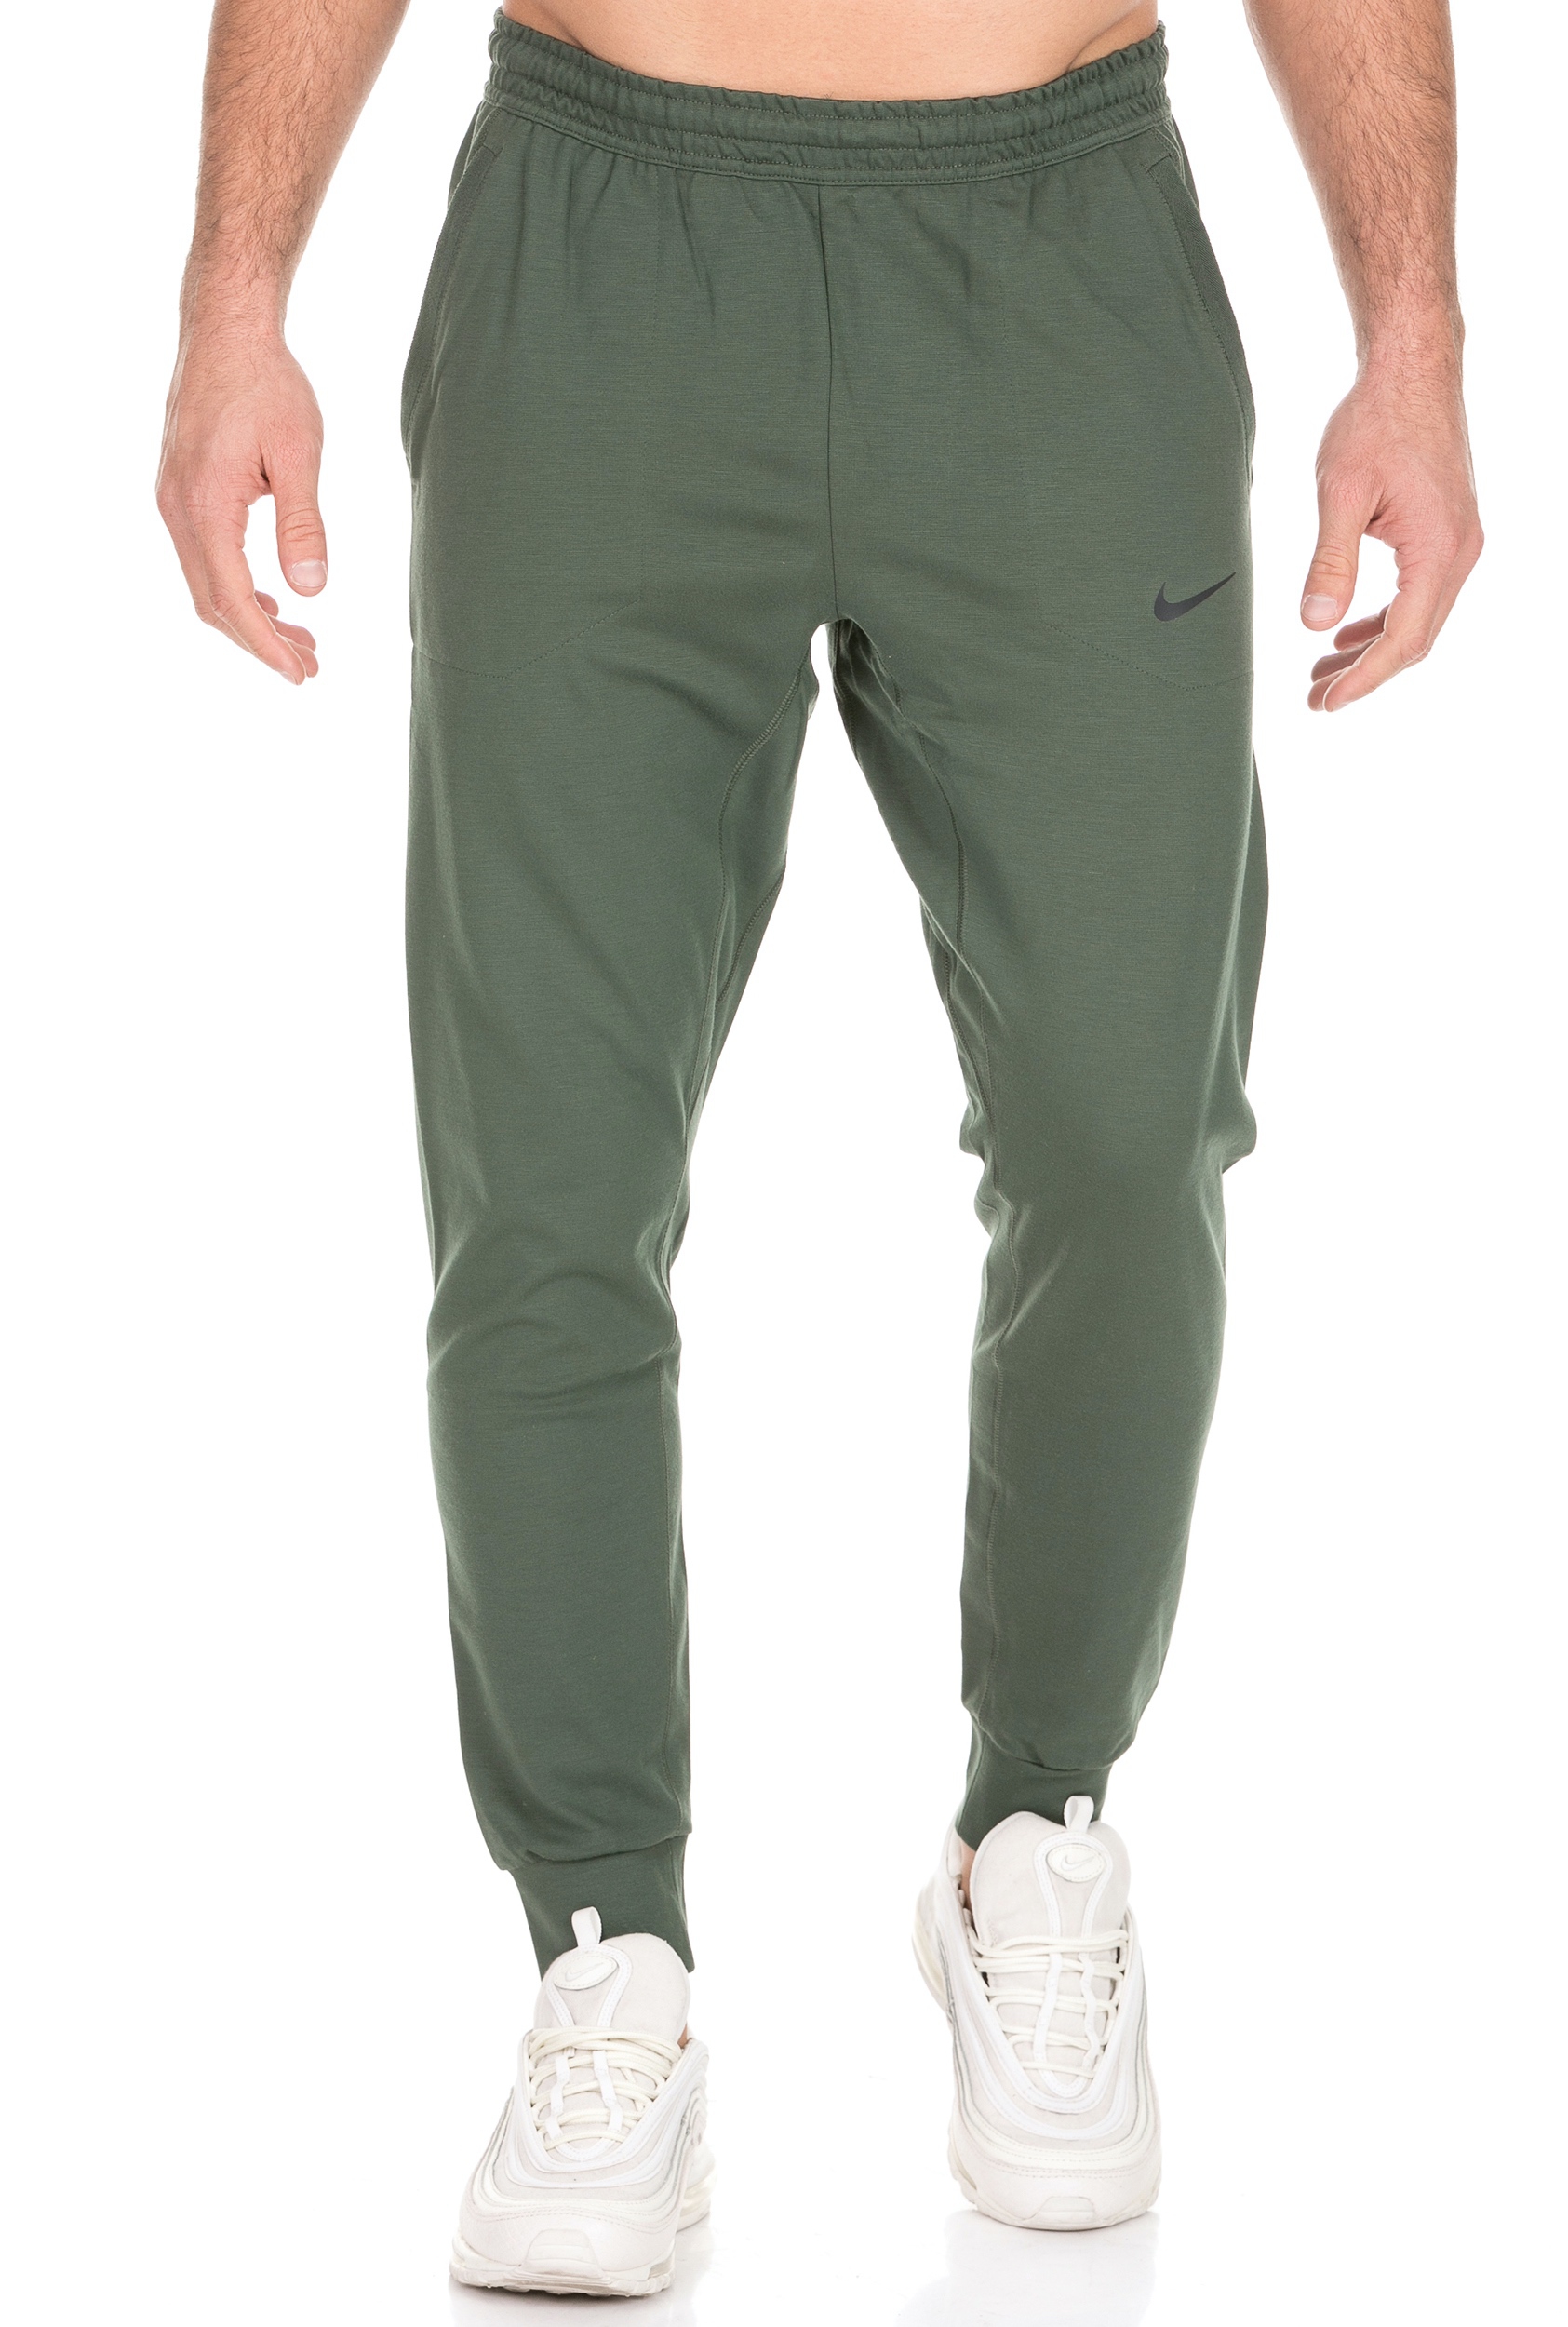 NIKE - Ανδρικό παντελόνι φόρμας NIKE NSW TCH PCK πράσινο